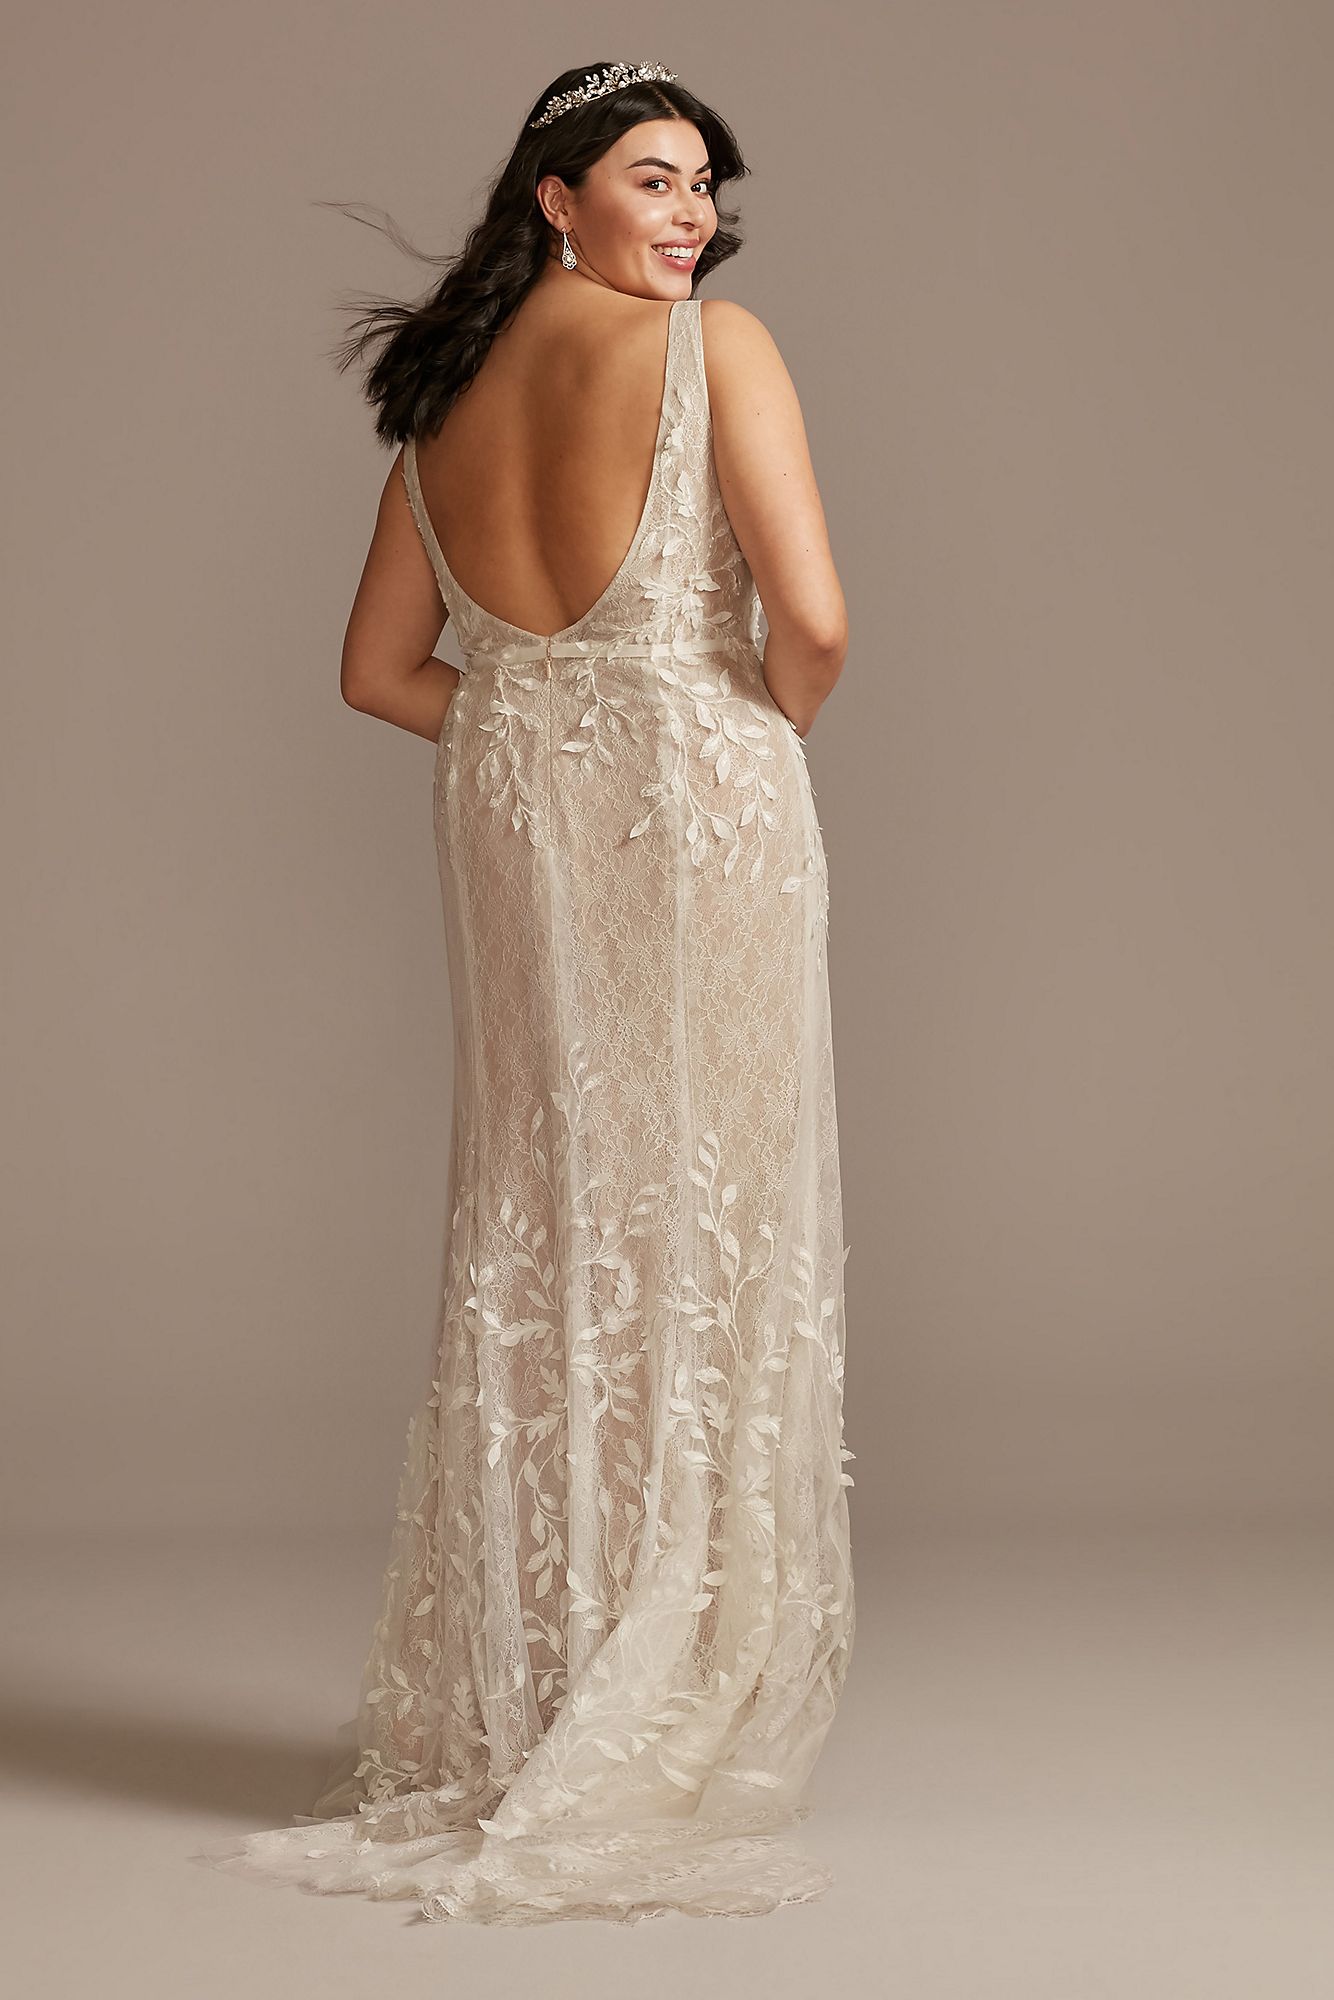 3D Leaves Applique Lace Tall Plus Wedding Dress 4XL8MS251223